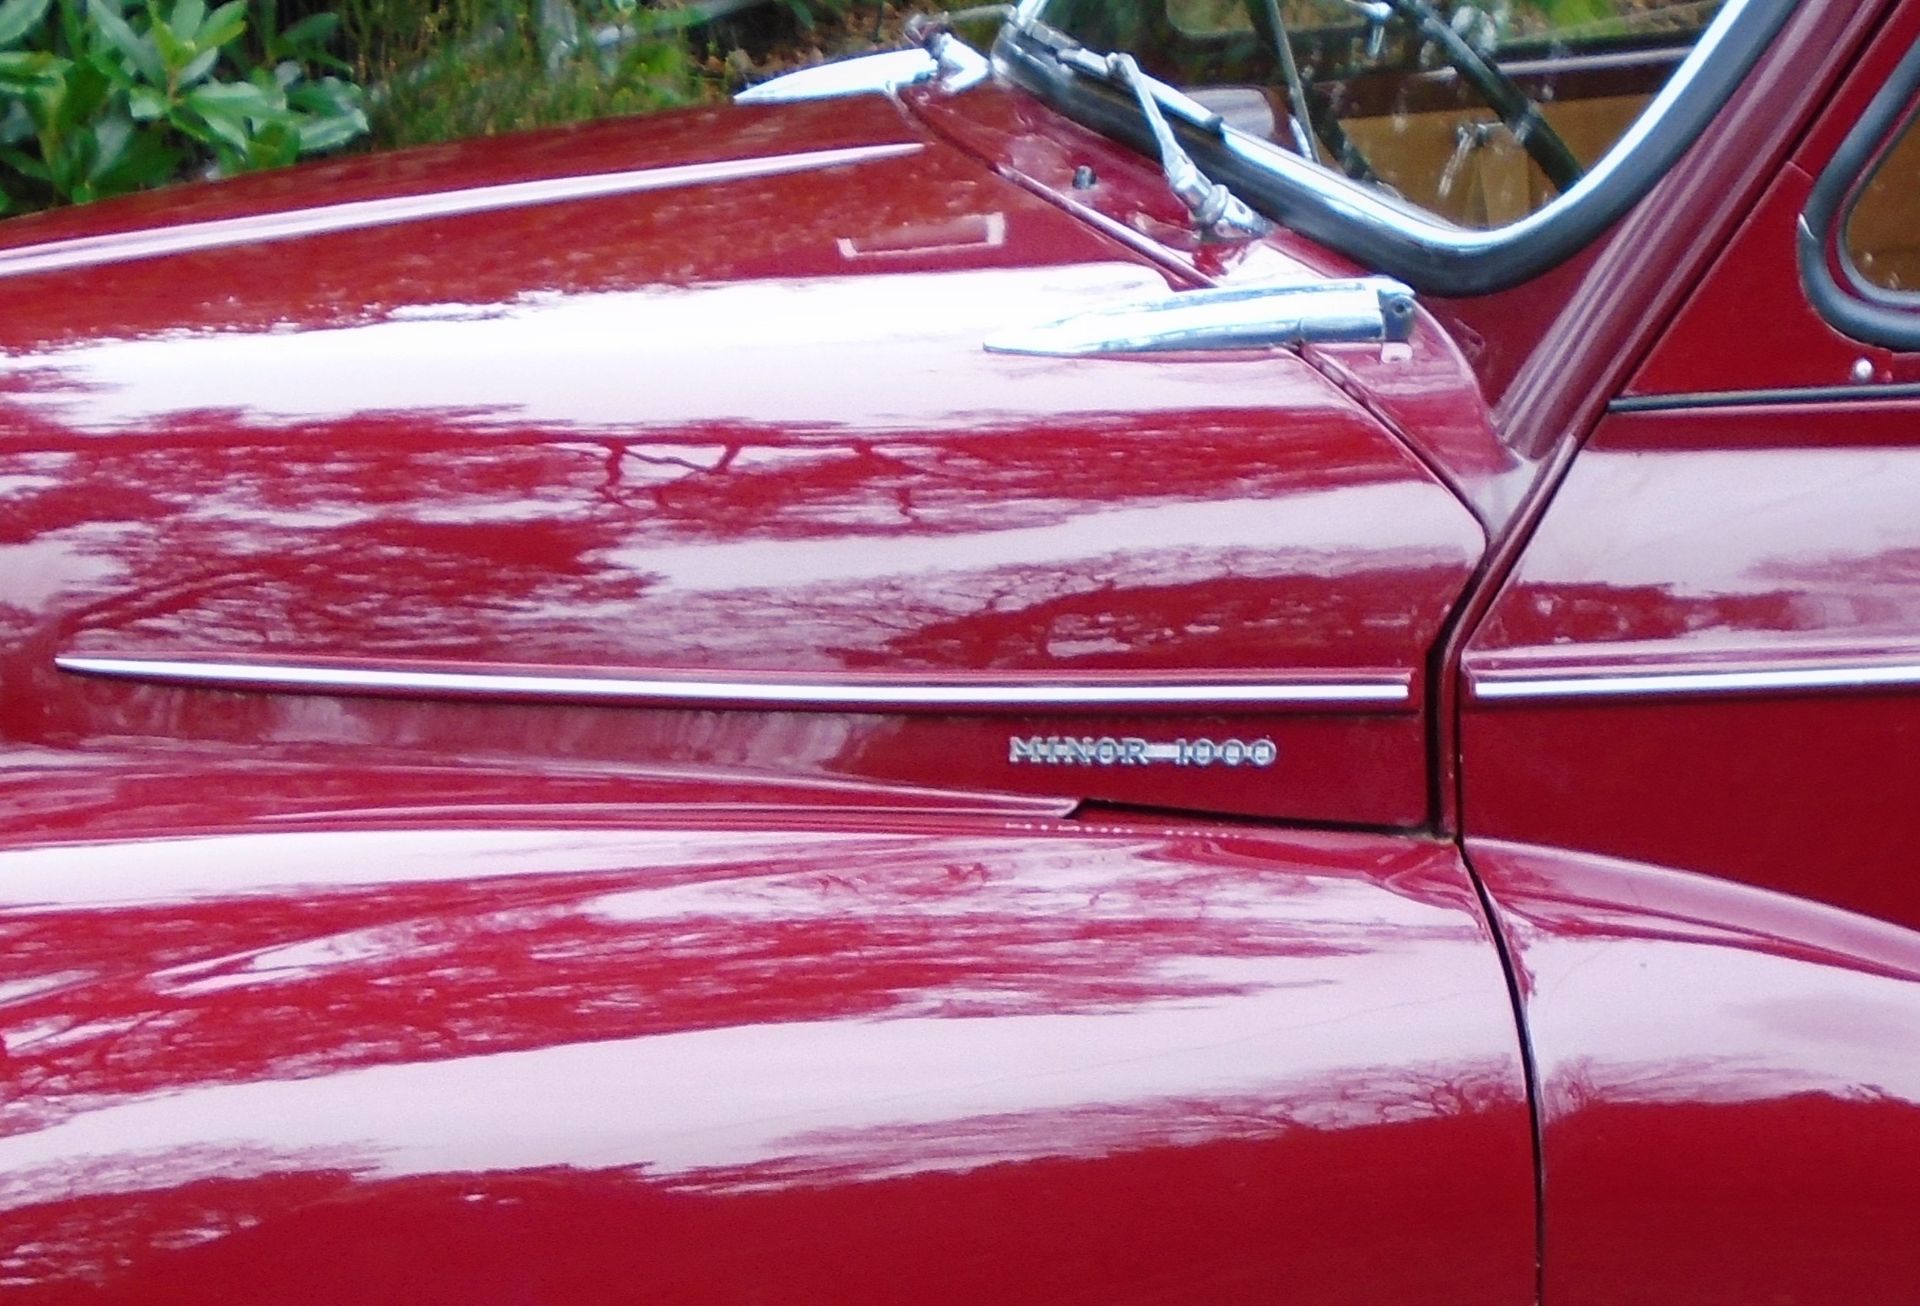 1963 MORRIS 1000 TOURER - Converted post-production Registration Number: 751 UXH Chassis Number: M/ - Image 4 of 21